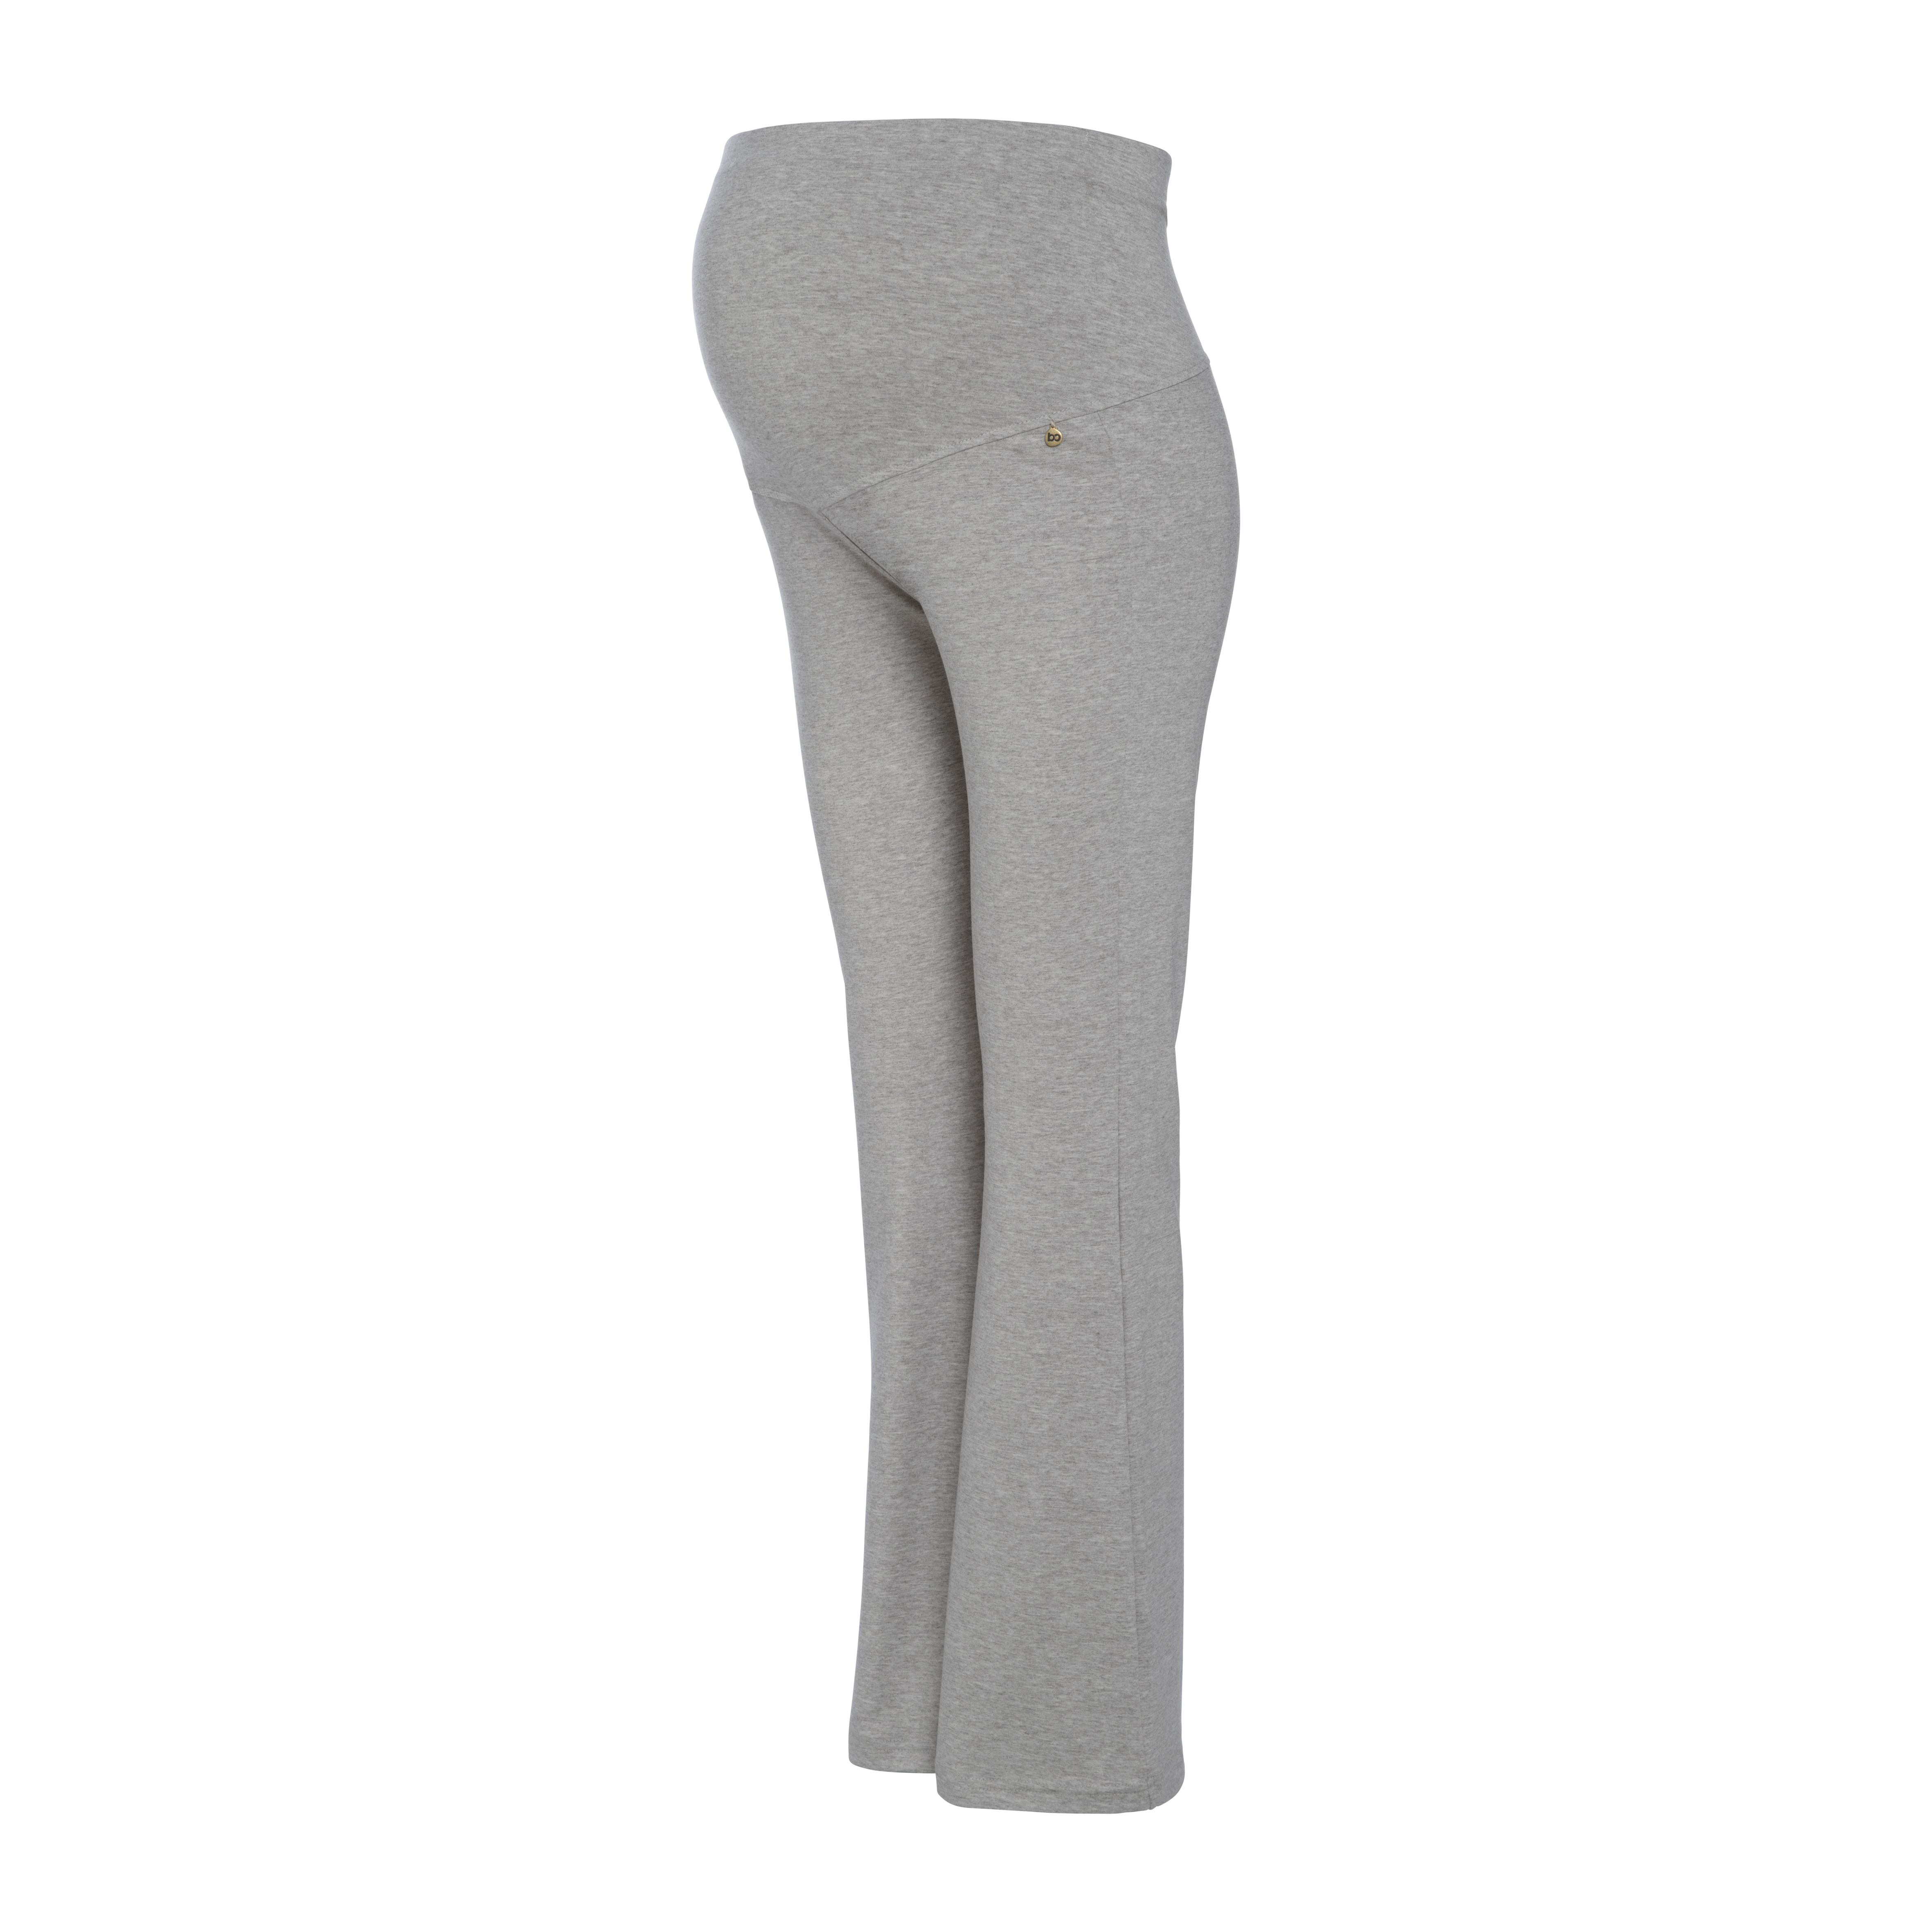 Flared pantalon de maternité Glow dusty grey - L